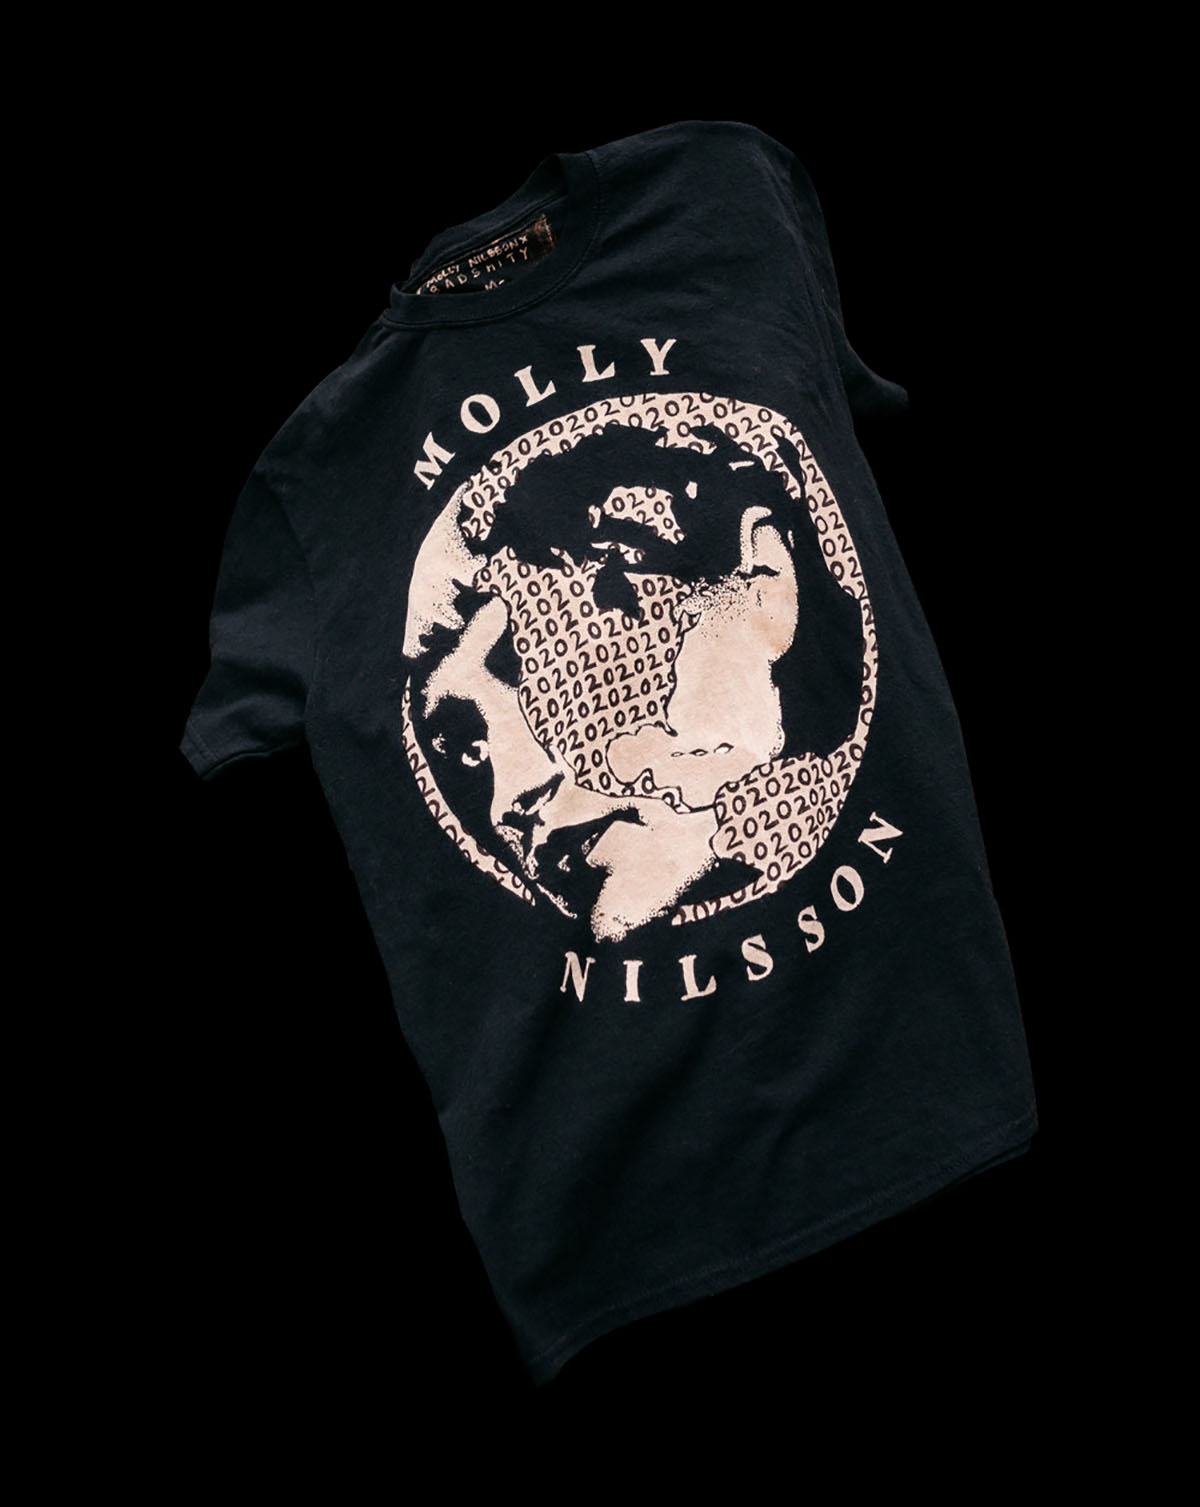 Molly Nilsson's Final T-Shirt Design